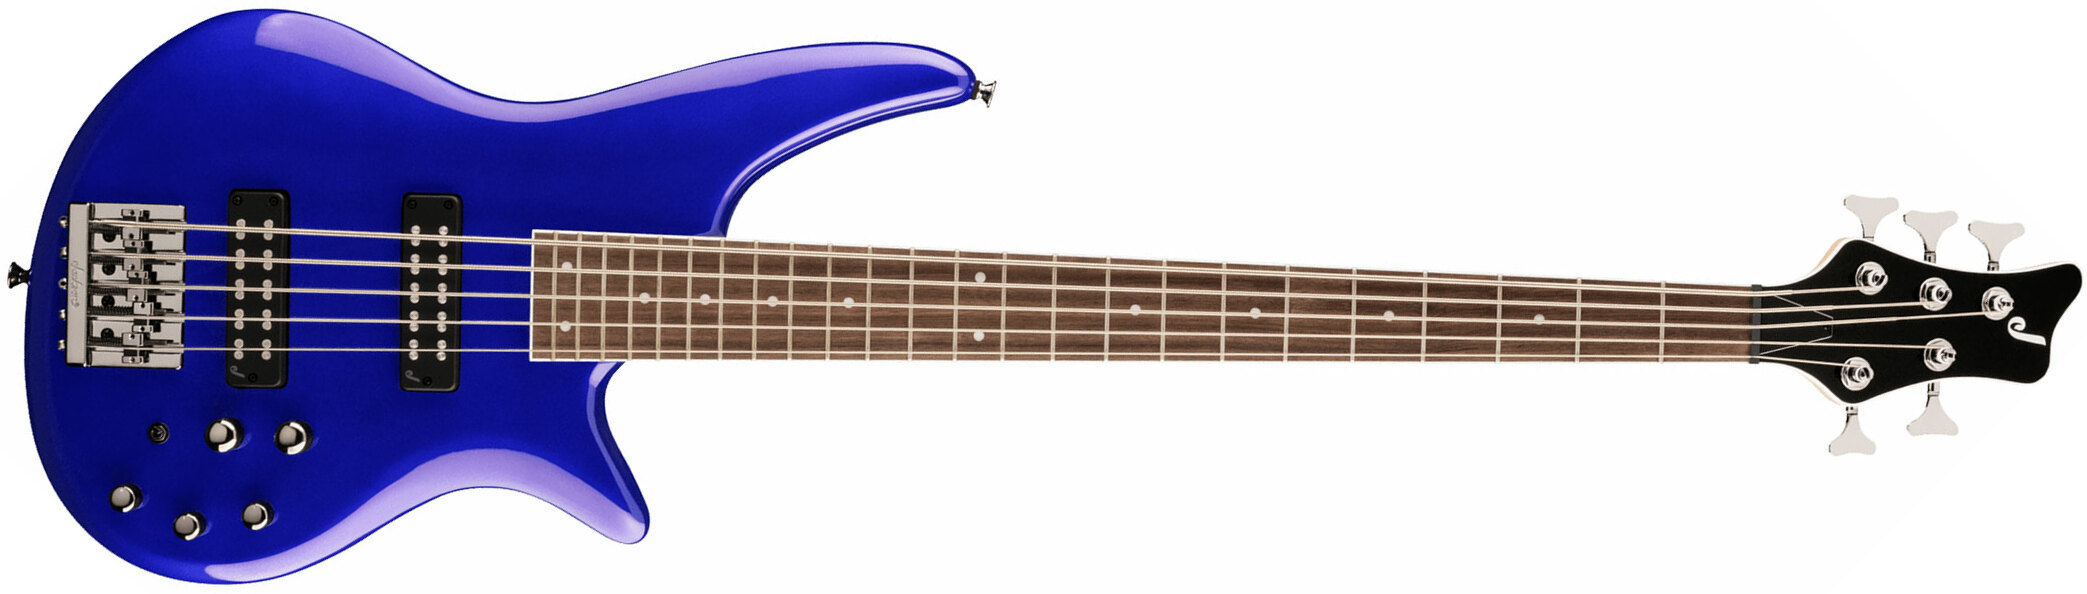 Jackson Spectra Bass Js3v 5c Active Lau - Indigo Blue - Bajo eléctrico de cuerpo sólido - Main picture